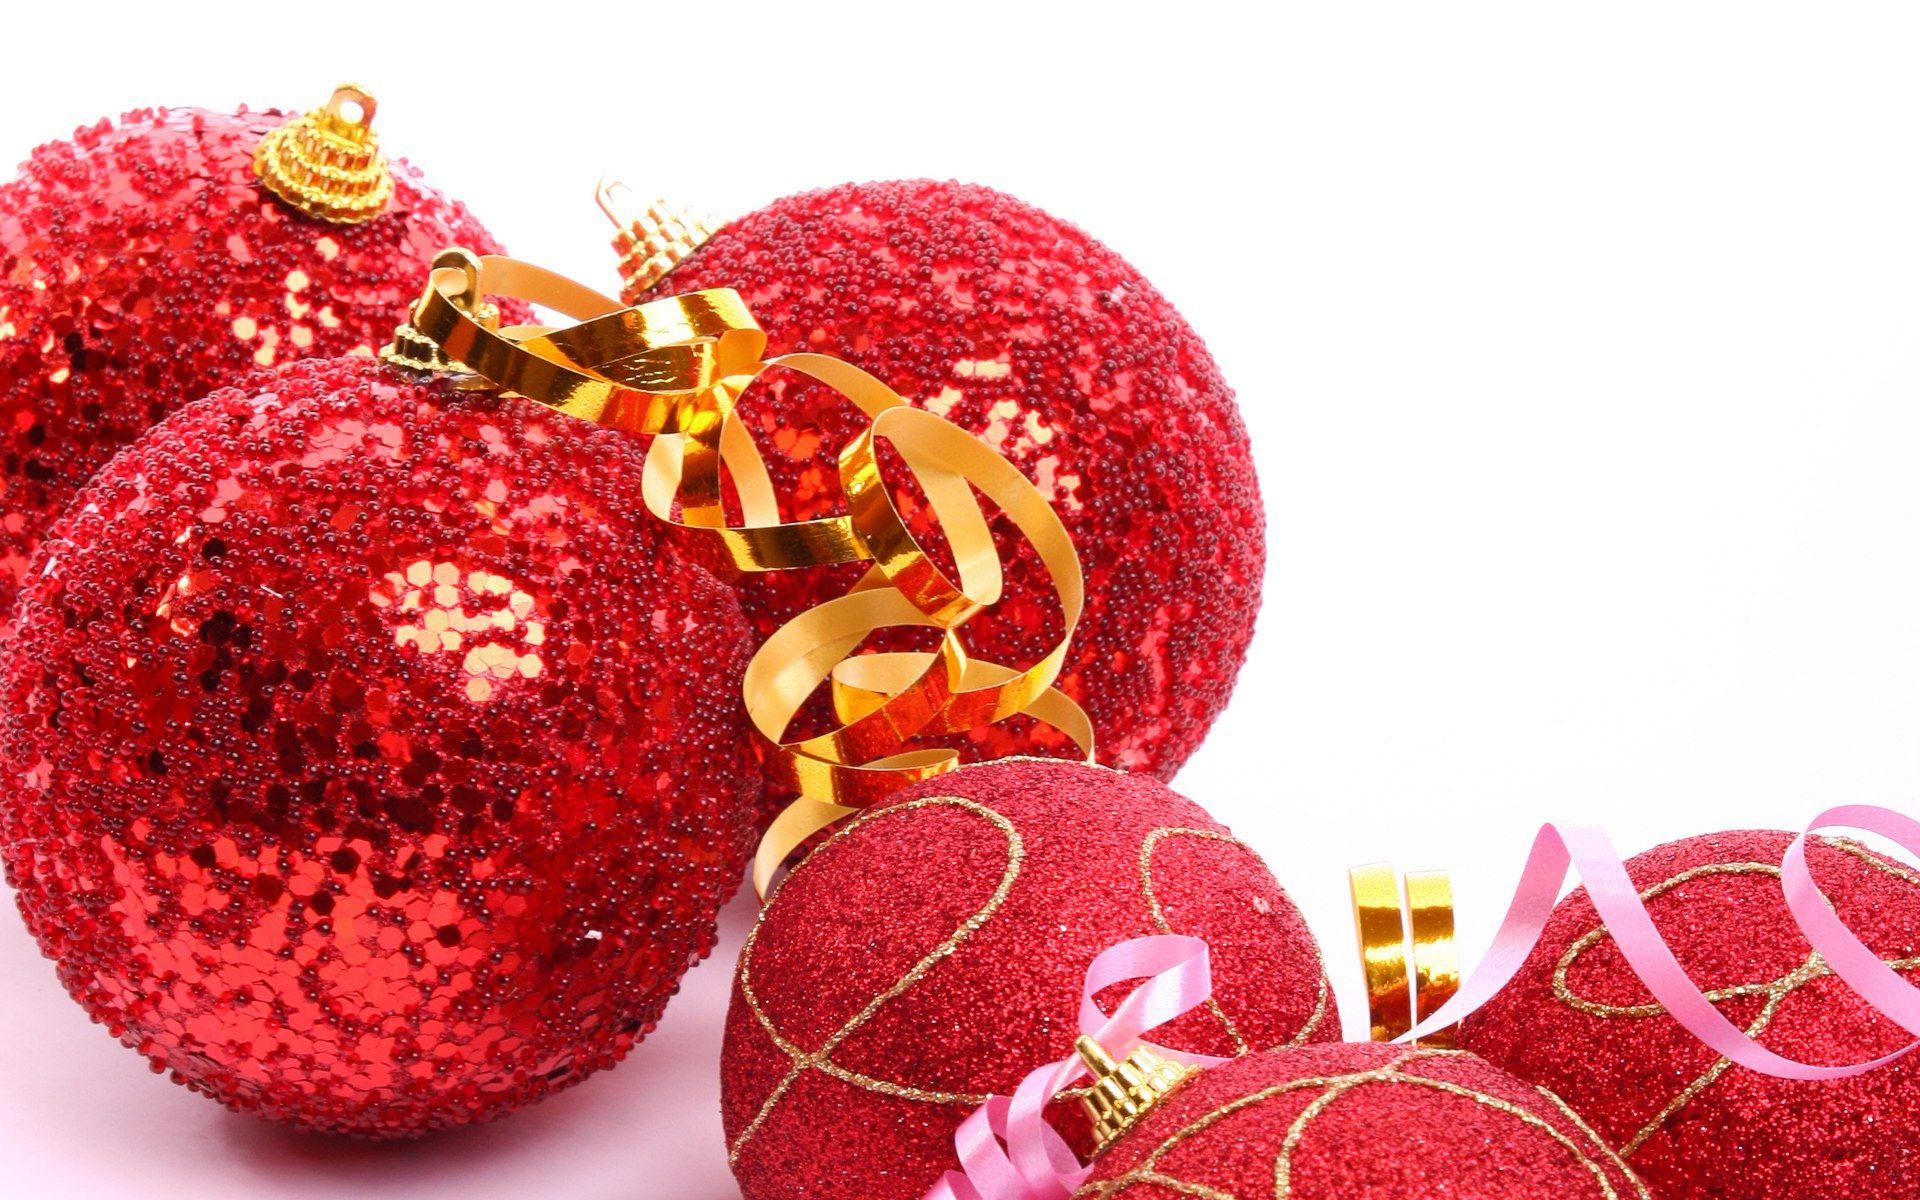 Christmas ball balls wallpaper red bauble tree holiday